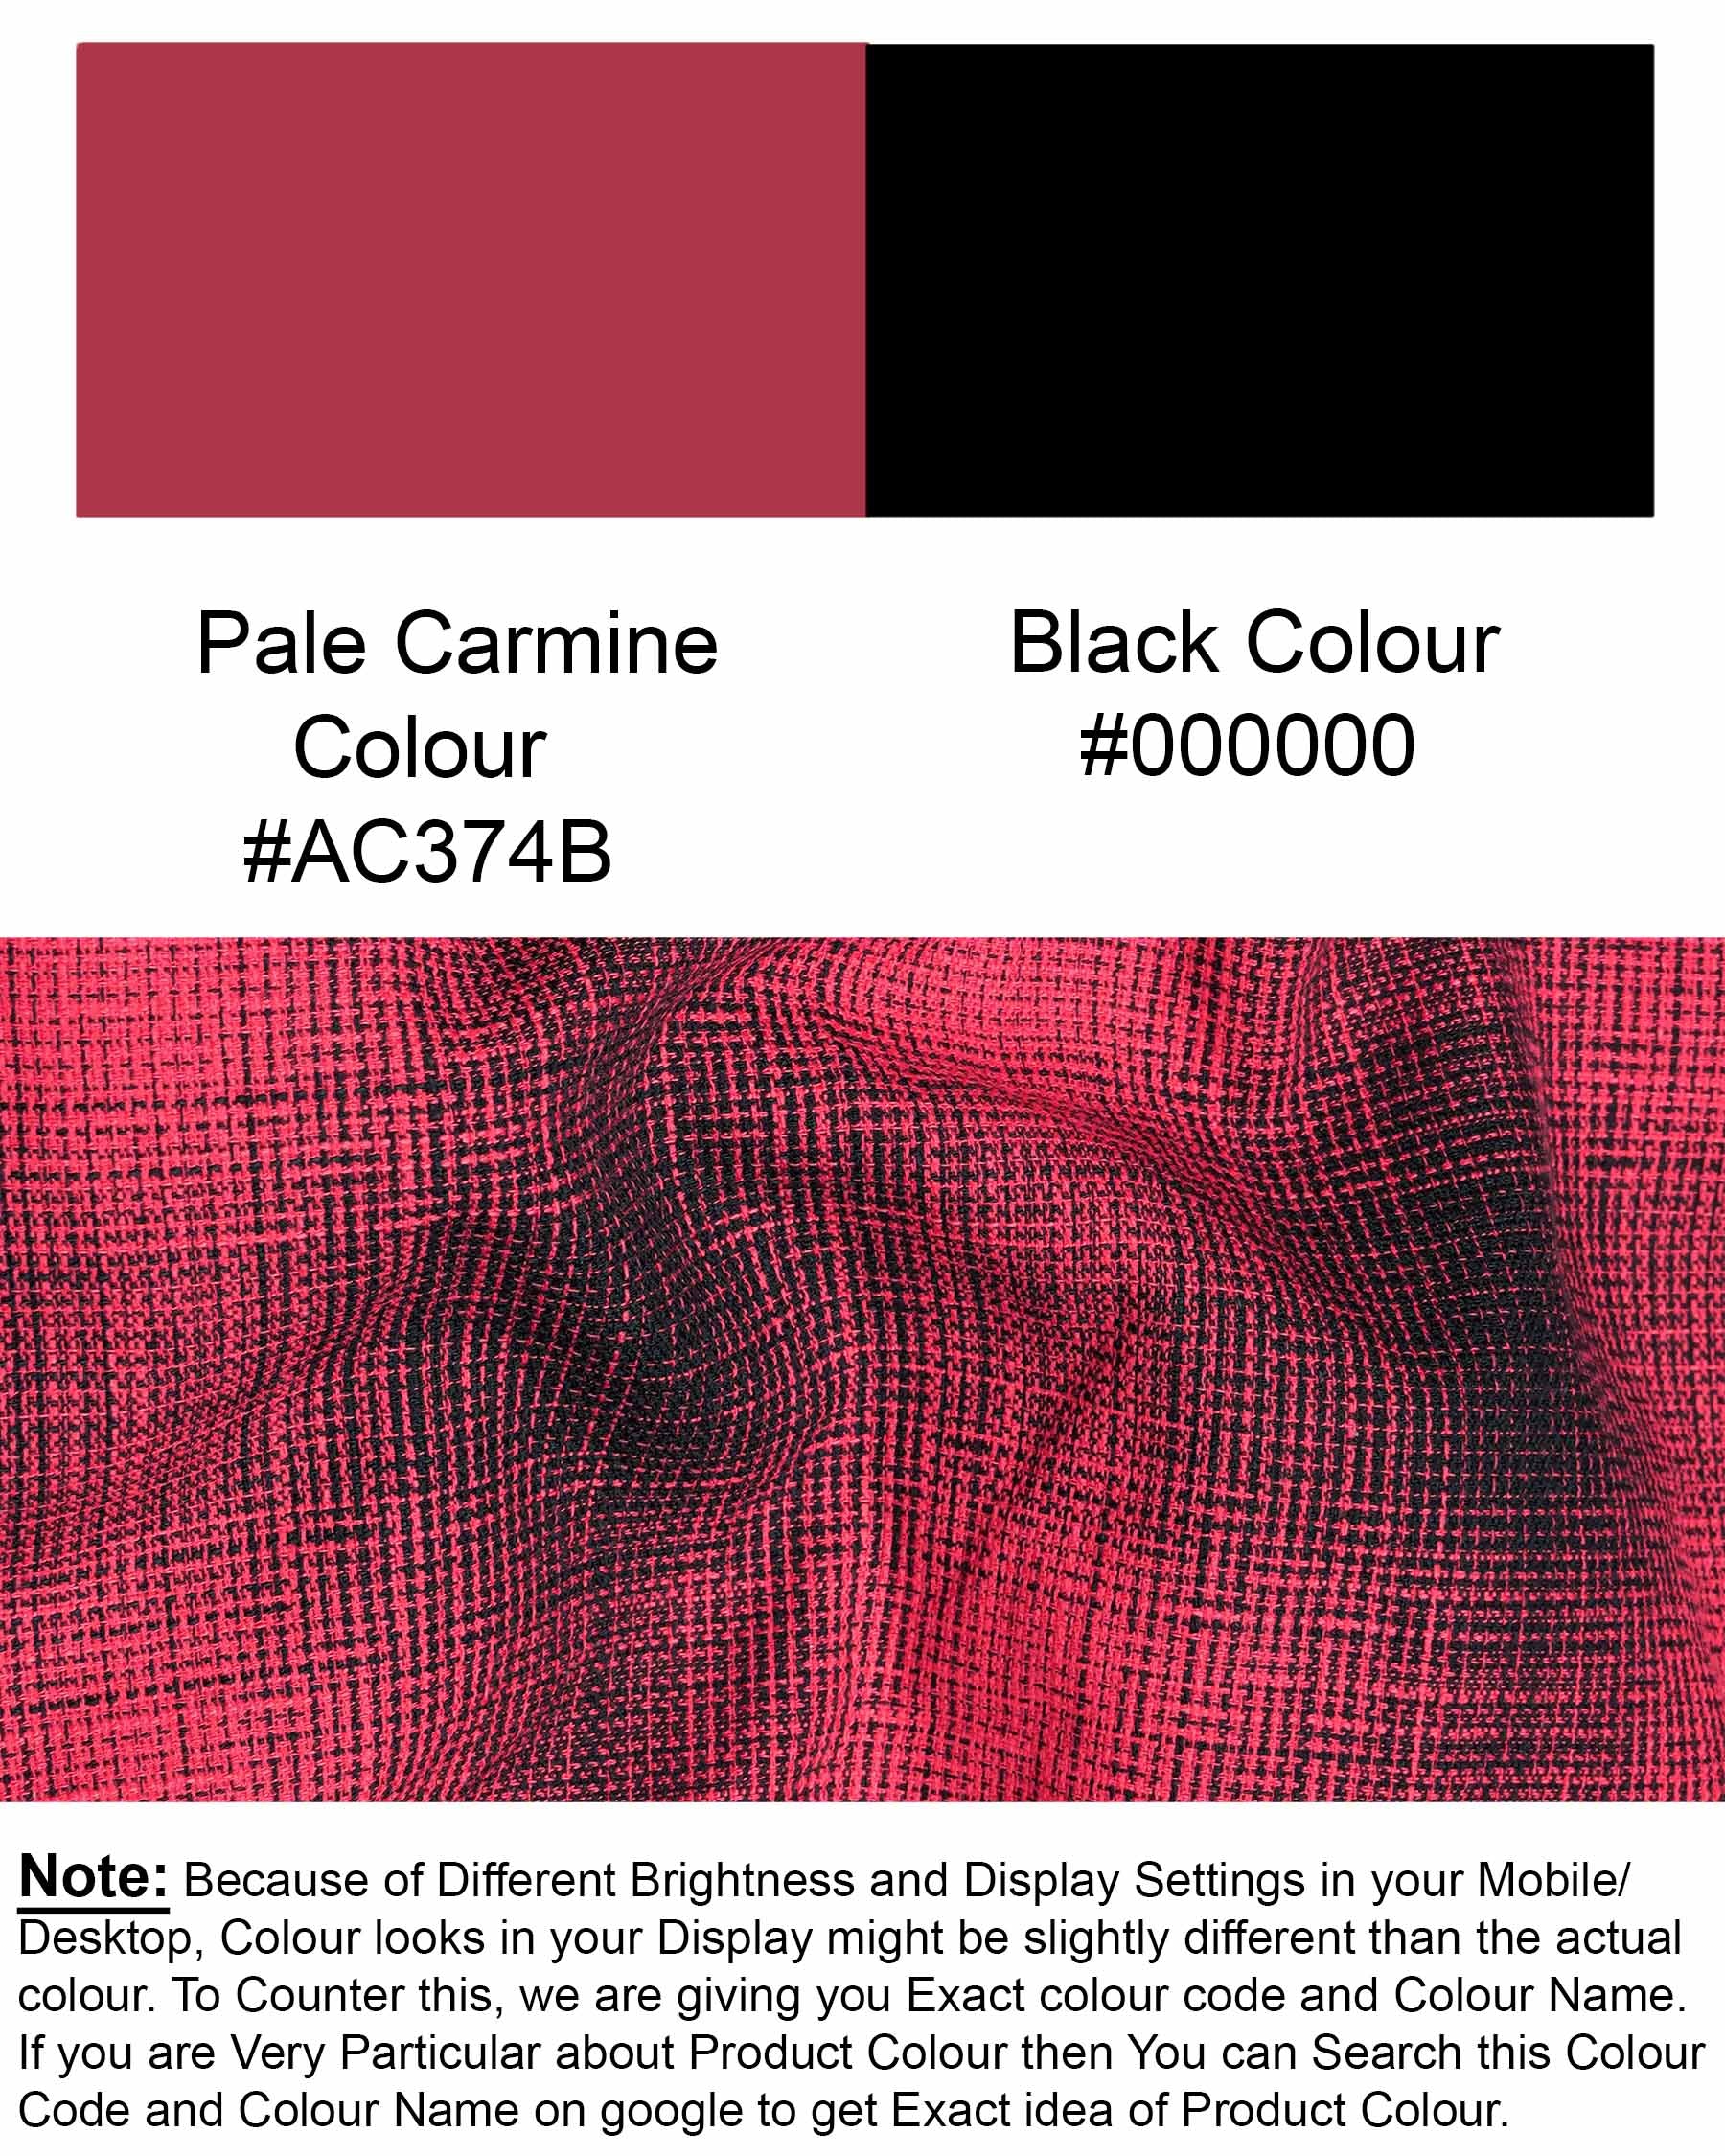 Pale Carmine Red and Jade Black Plaid Dobby Textured Premium Giza Cotton Shirt  7462-BD-BLK-38, 7462-BD-BLK-H-38, 7462-BD-BLK-39, 7462-BD-BLK-H-39, 7462-BD-BLK-40, 7462-BD-BLK-H-40, 7462-BD-BLK-42, 7462-BD-BLK-H-42, 7462-BD-BLK-44, 7462-BD-BLK-H-44, 7462-BD-BLK-46, 7462-BD-BLK-H-46, 7462-BD-BLK-48, 7462-BD-BLK-H-48, 7462-BD-BLK-50, 7462-BD-BLK-H-50, 7462-BD-BLK-52, 7462-BD-BLK-H-52